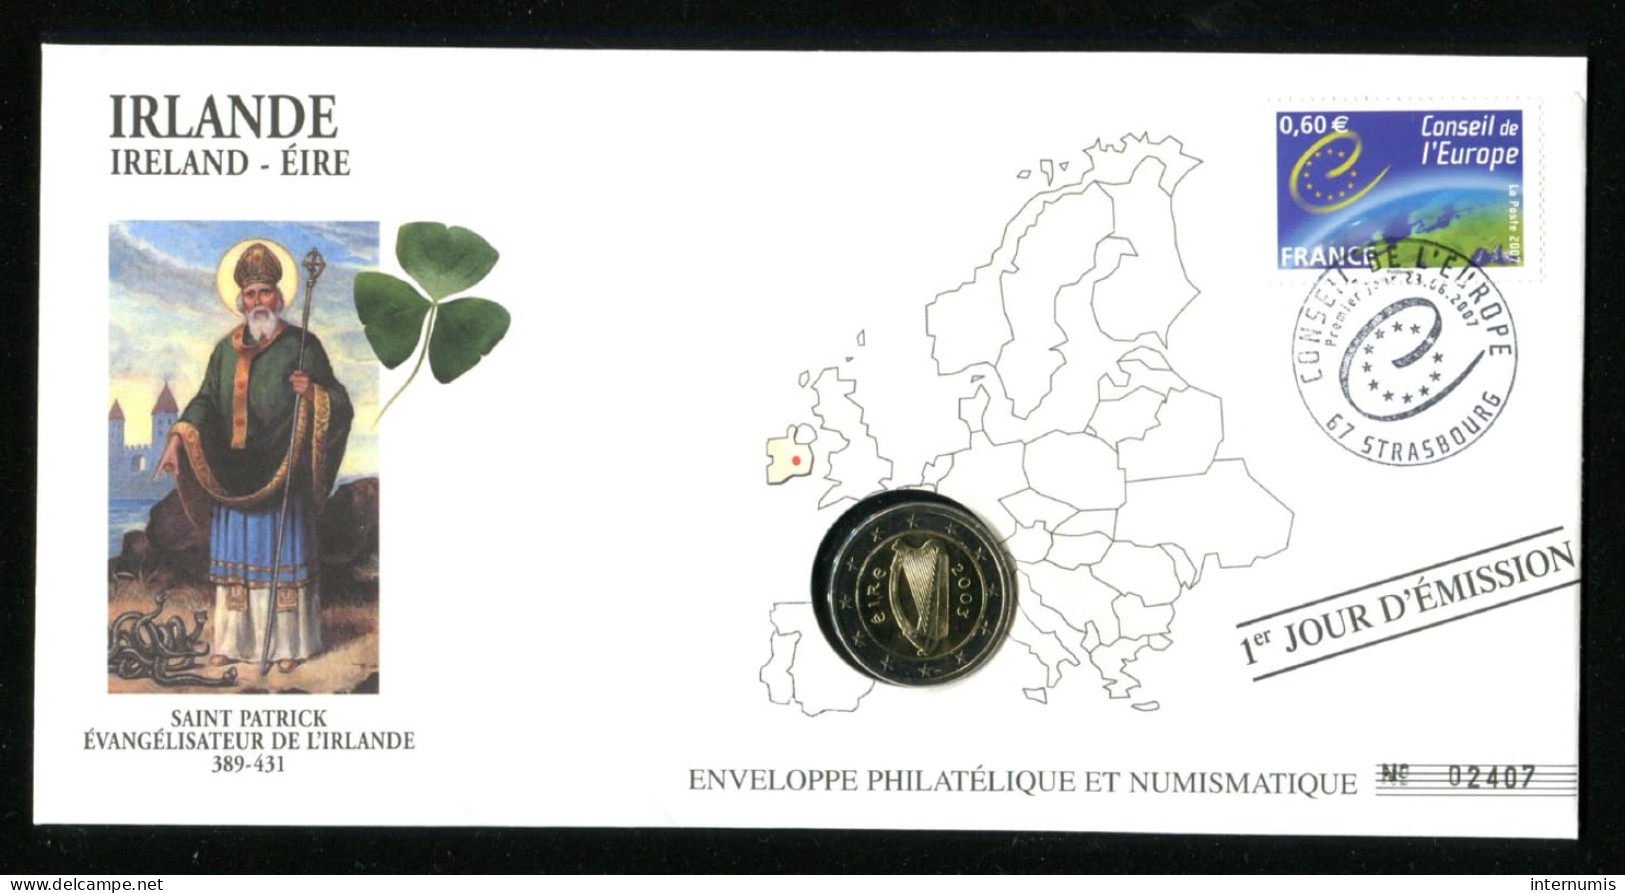 Irlande / Ireland, 2 Euro, 2003, 1er Jour D'Emission (23-06-2007) - Enveloppe Philatélique Et Numismatique - Irlande